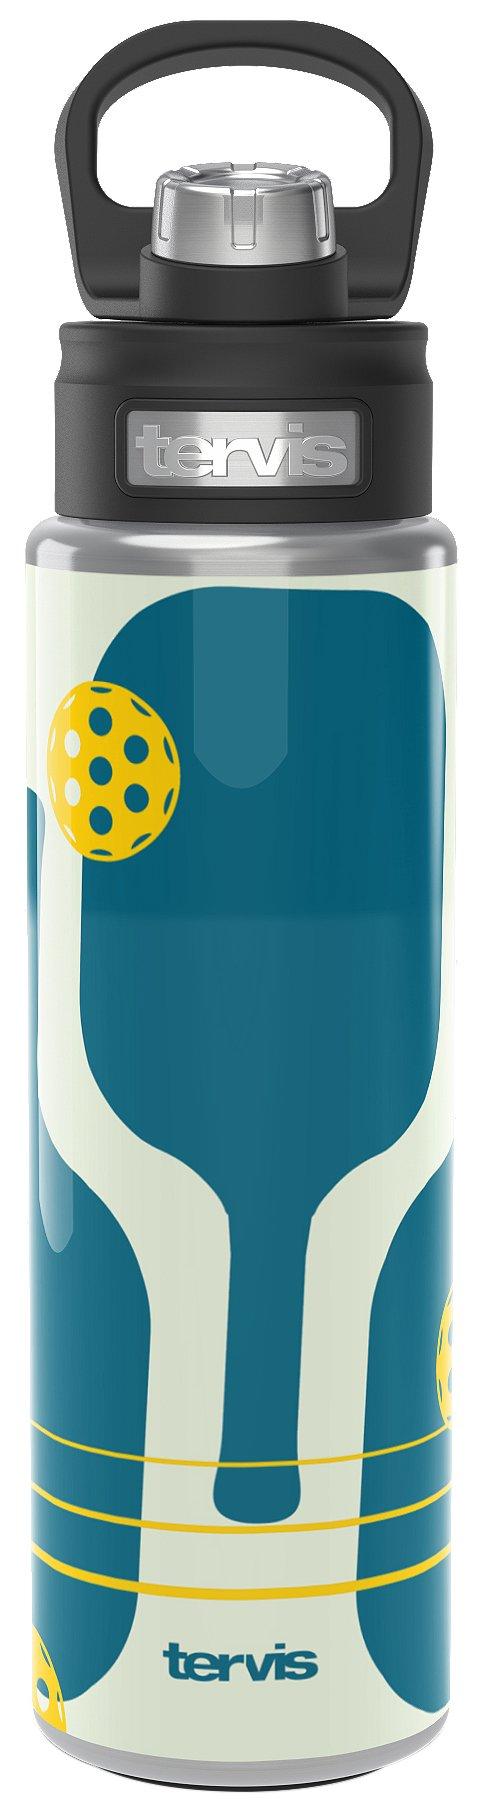 Swissgear 18 oz Stainless Steel Insulated Bottle